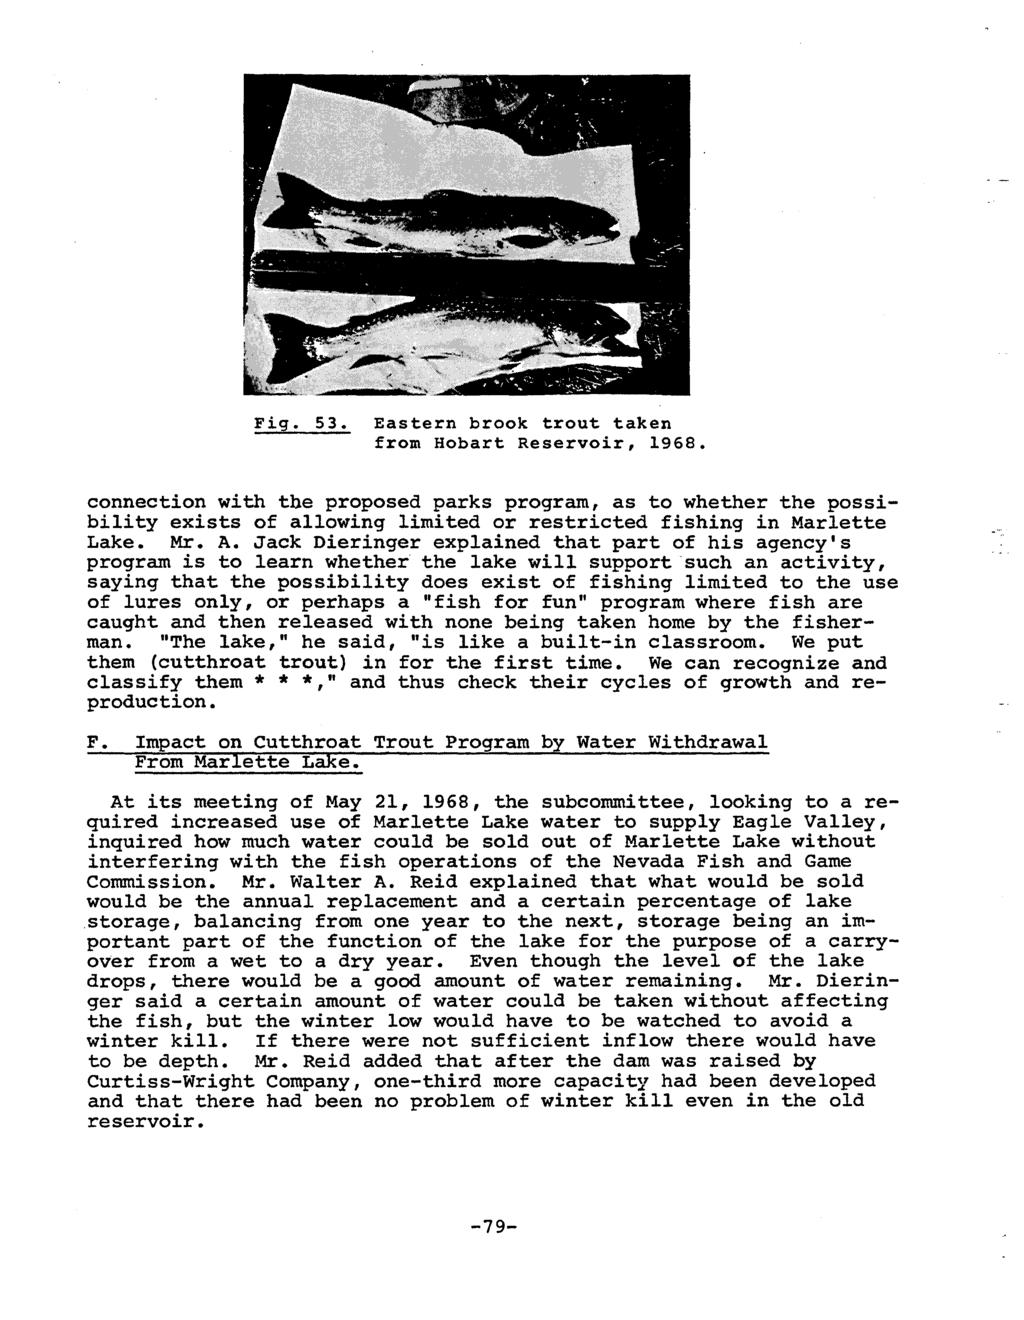 " '...-r,..;-""":!.l' -JIIj Fig. 53. Eastern brook trout taken from Hobart Reservoir, 1968.